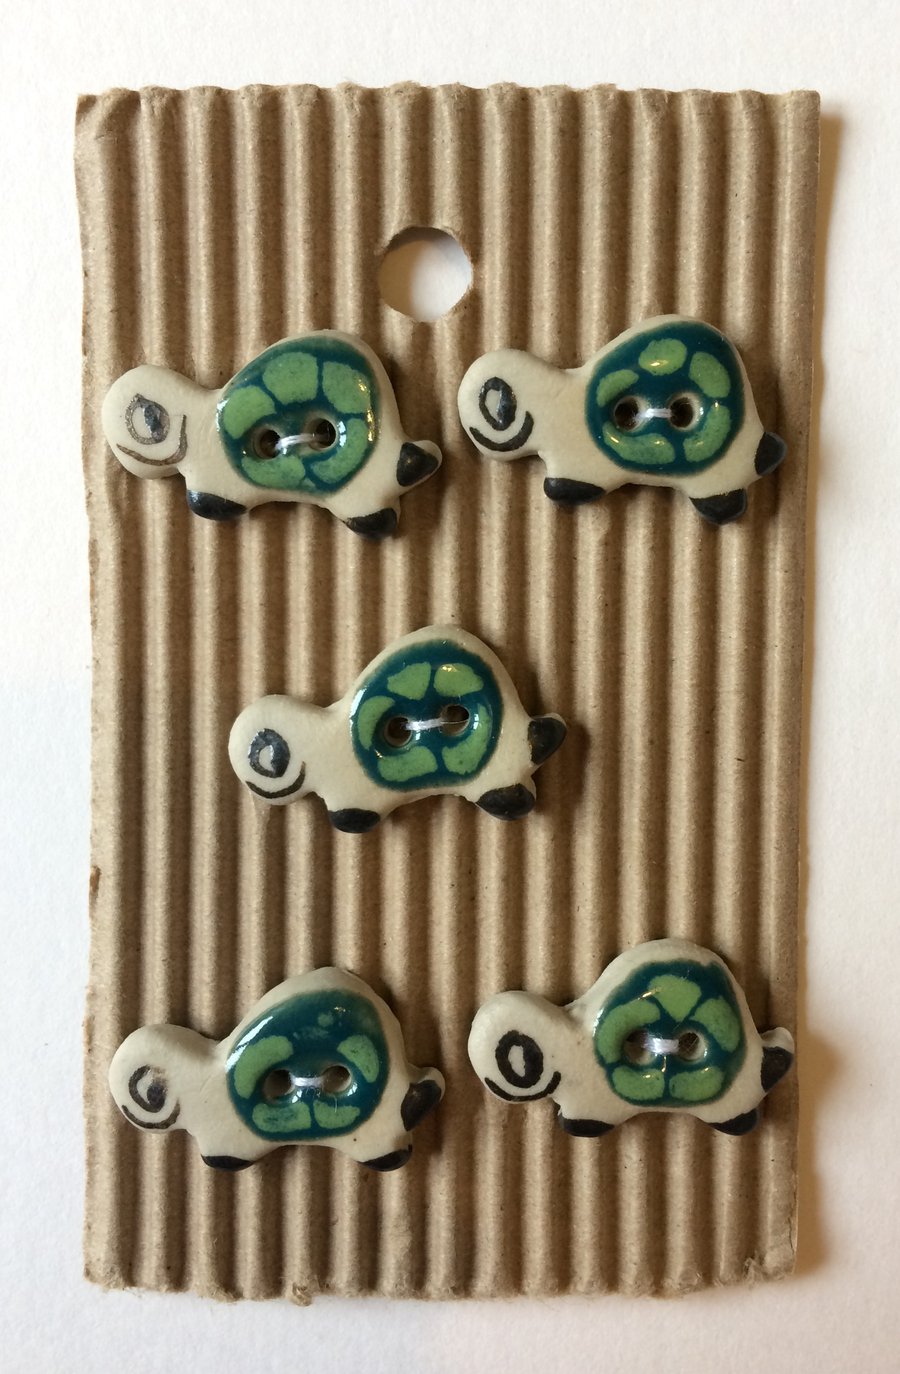 Set of 5 fun ceramic tortoise buttons